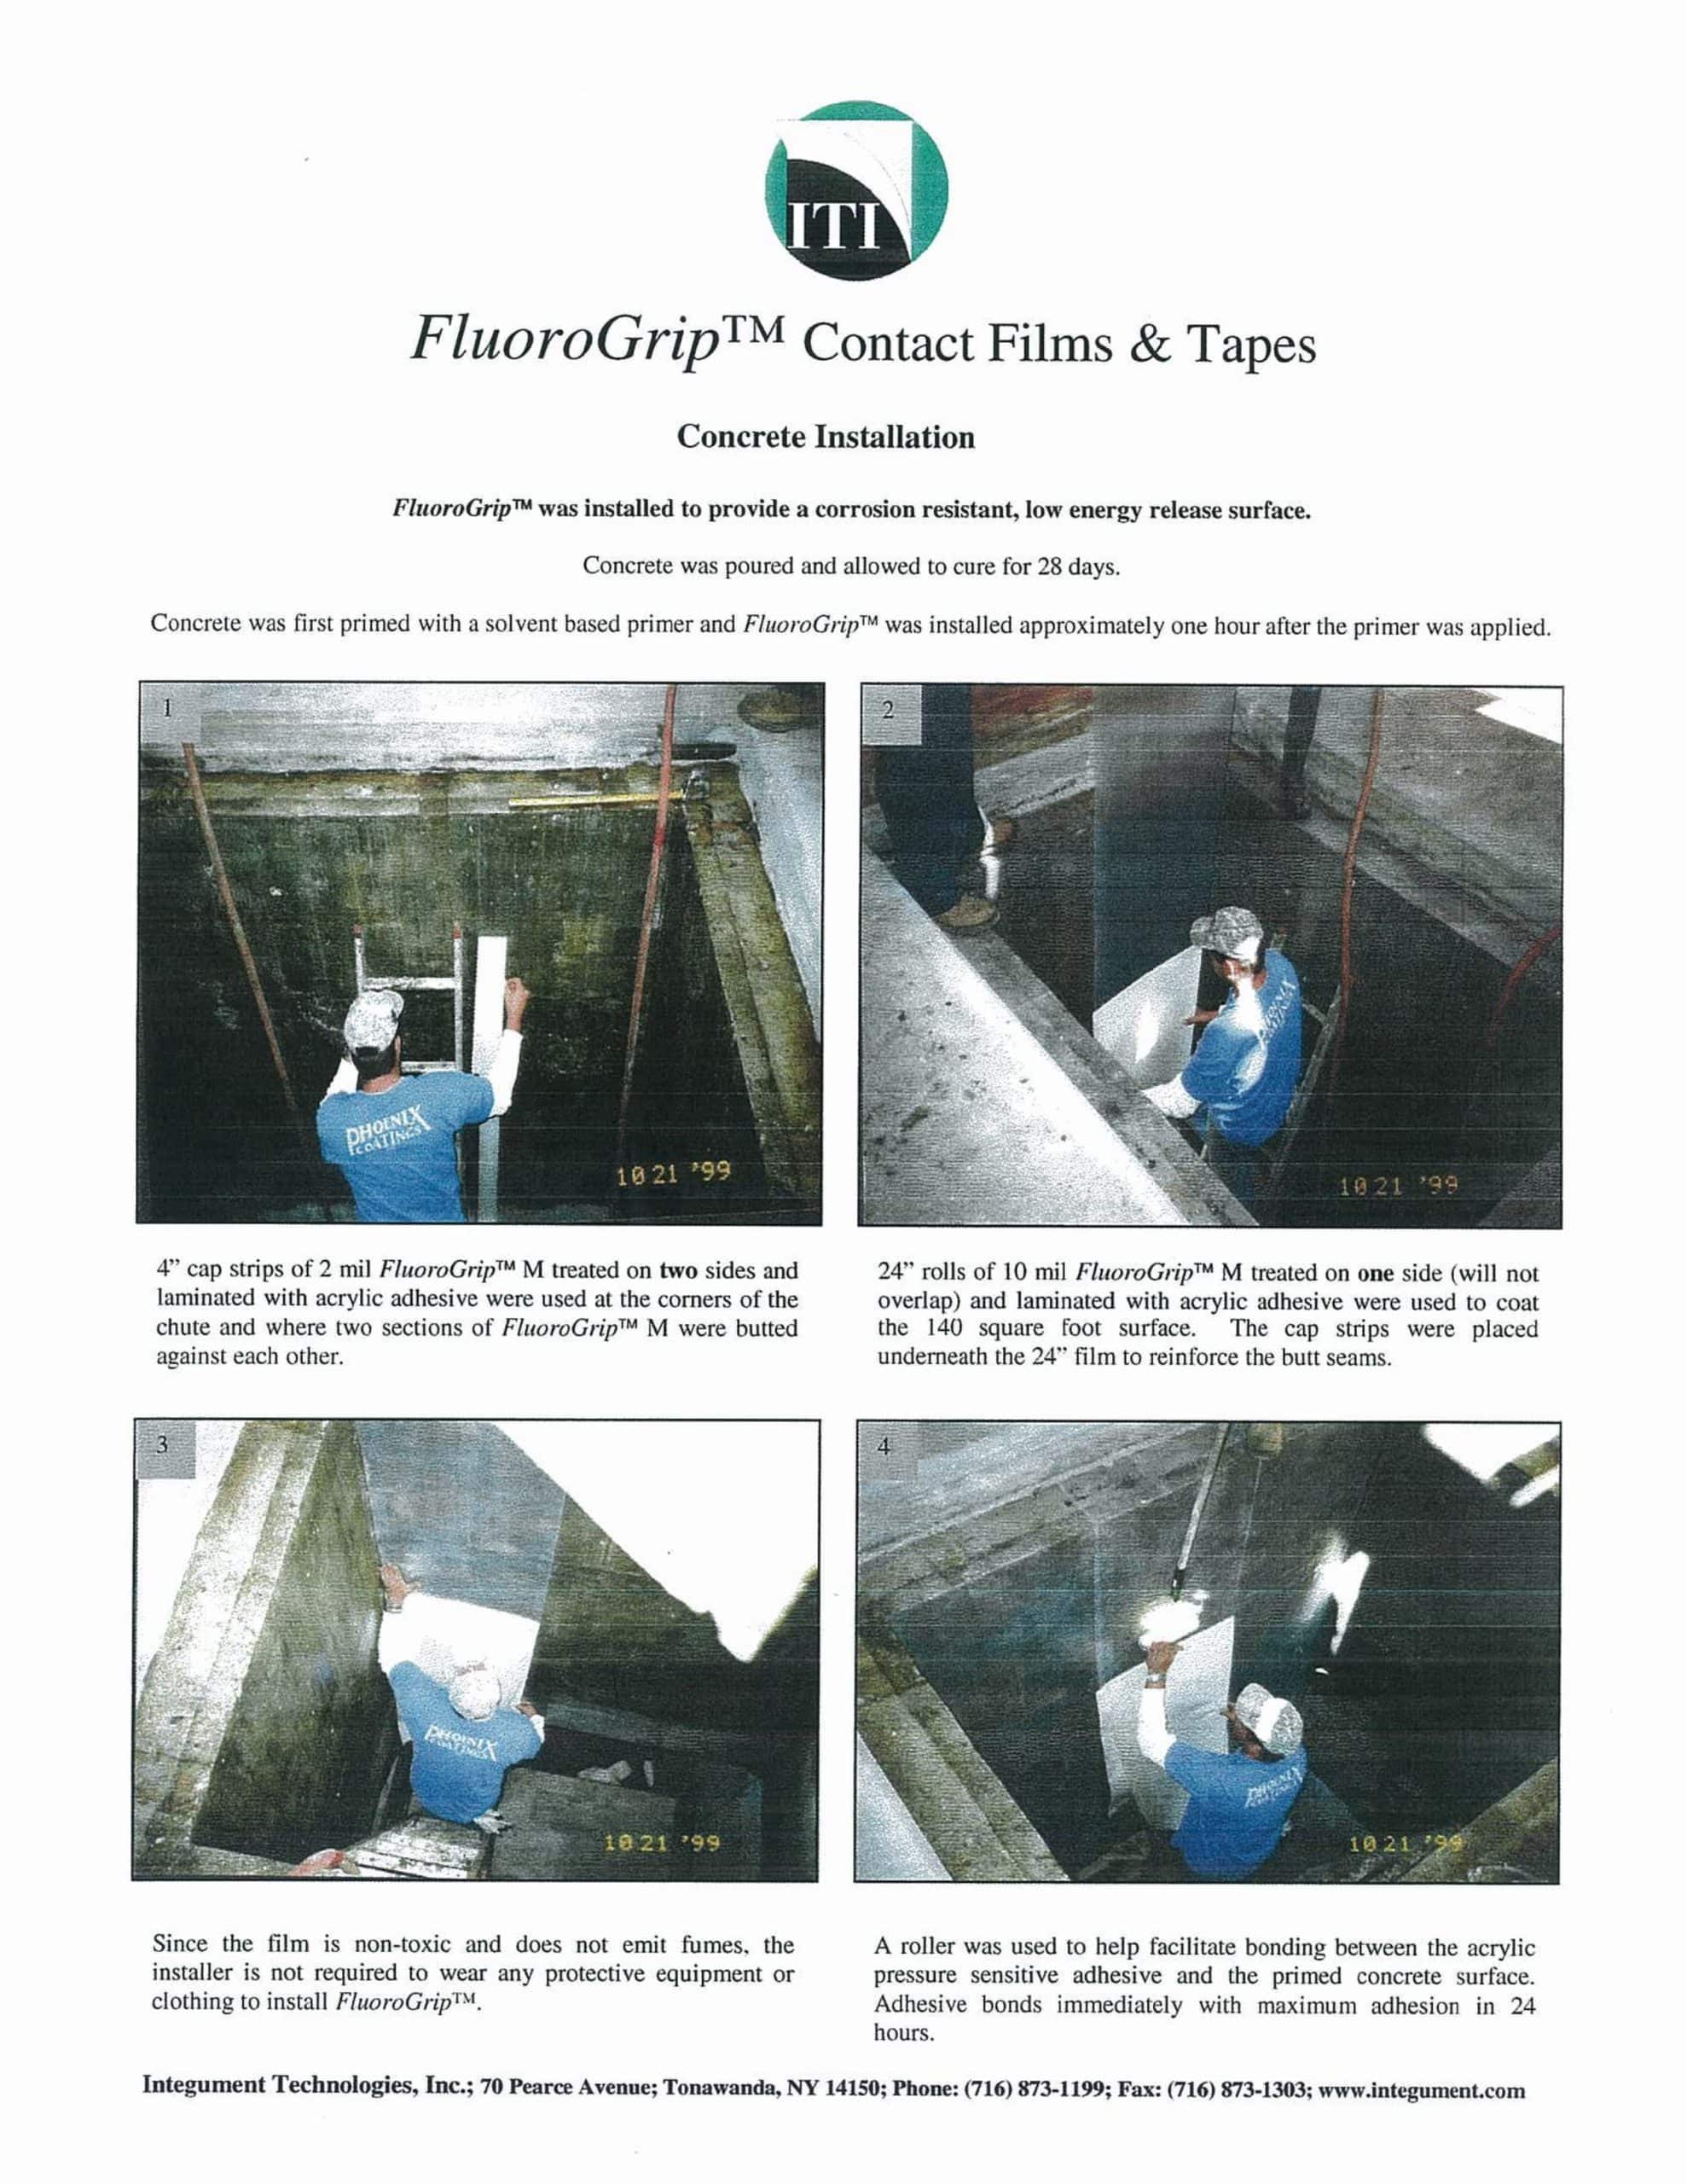 FluoroGrip Magazine article